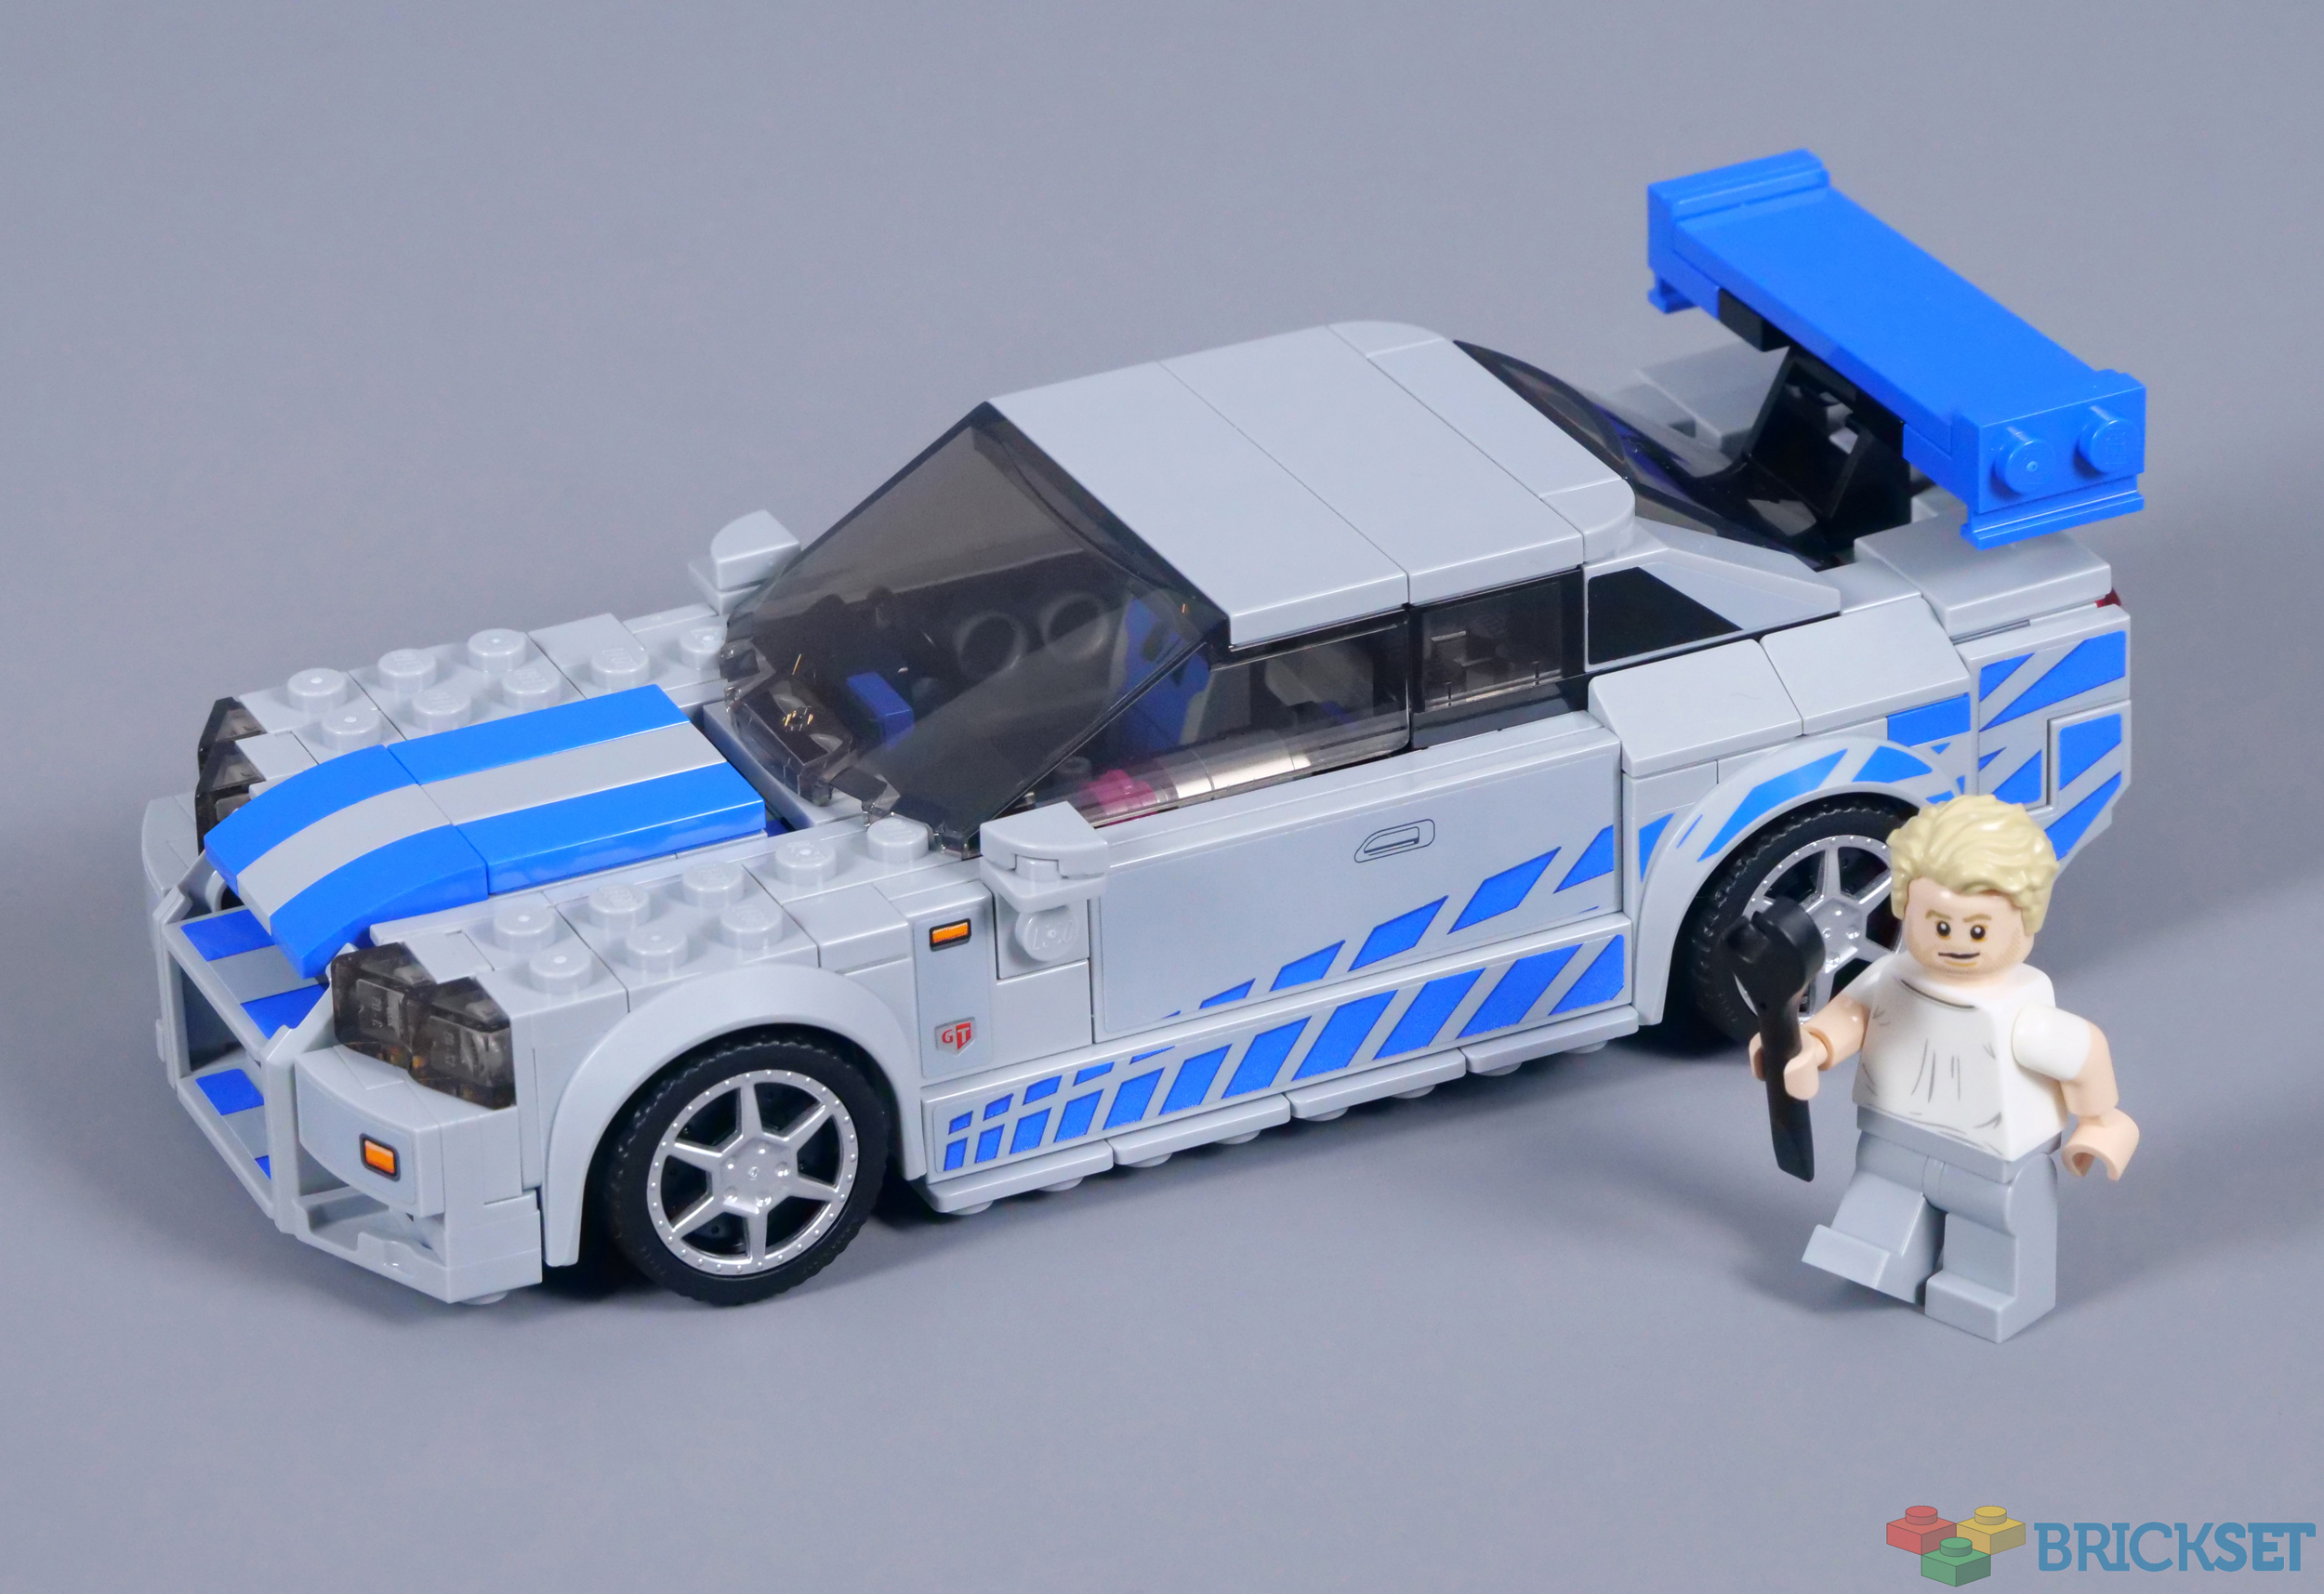 LEGO® Speed Champions 76917 Nissan Skyline GT-R R34 2 Fast 2